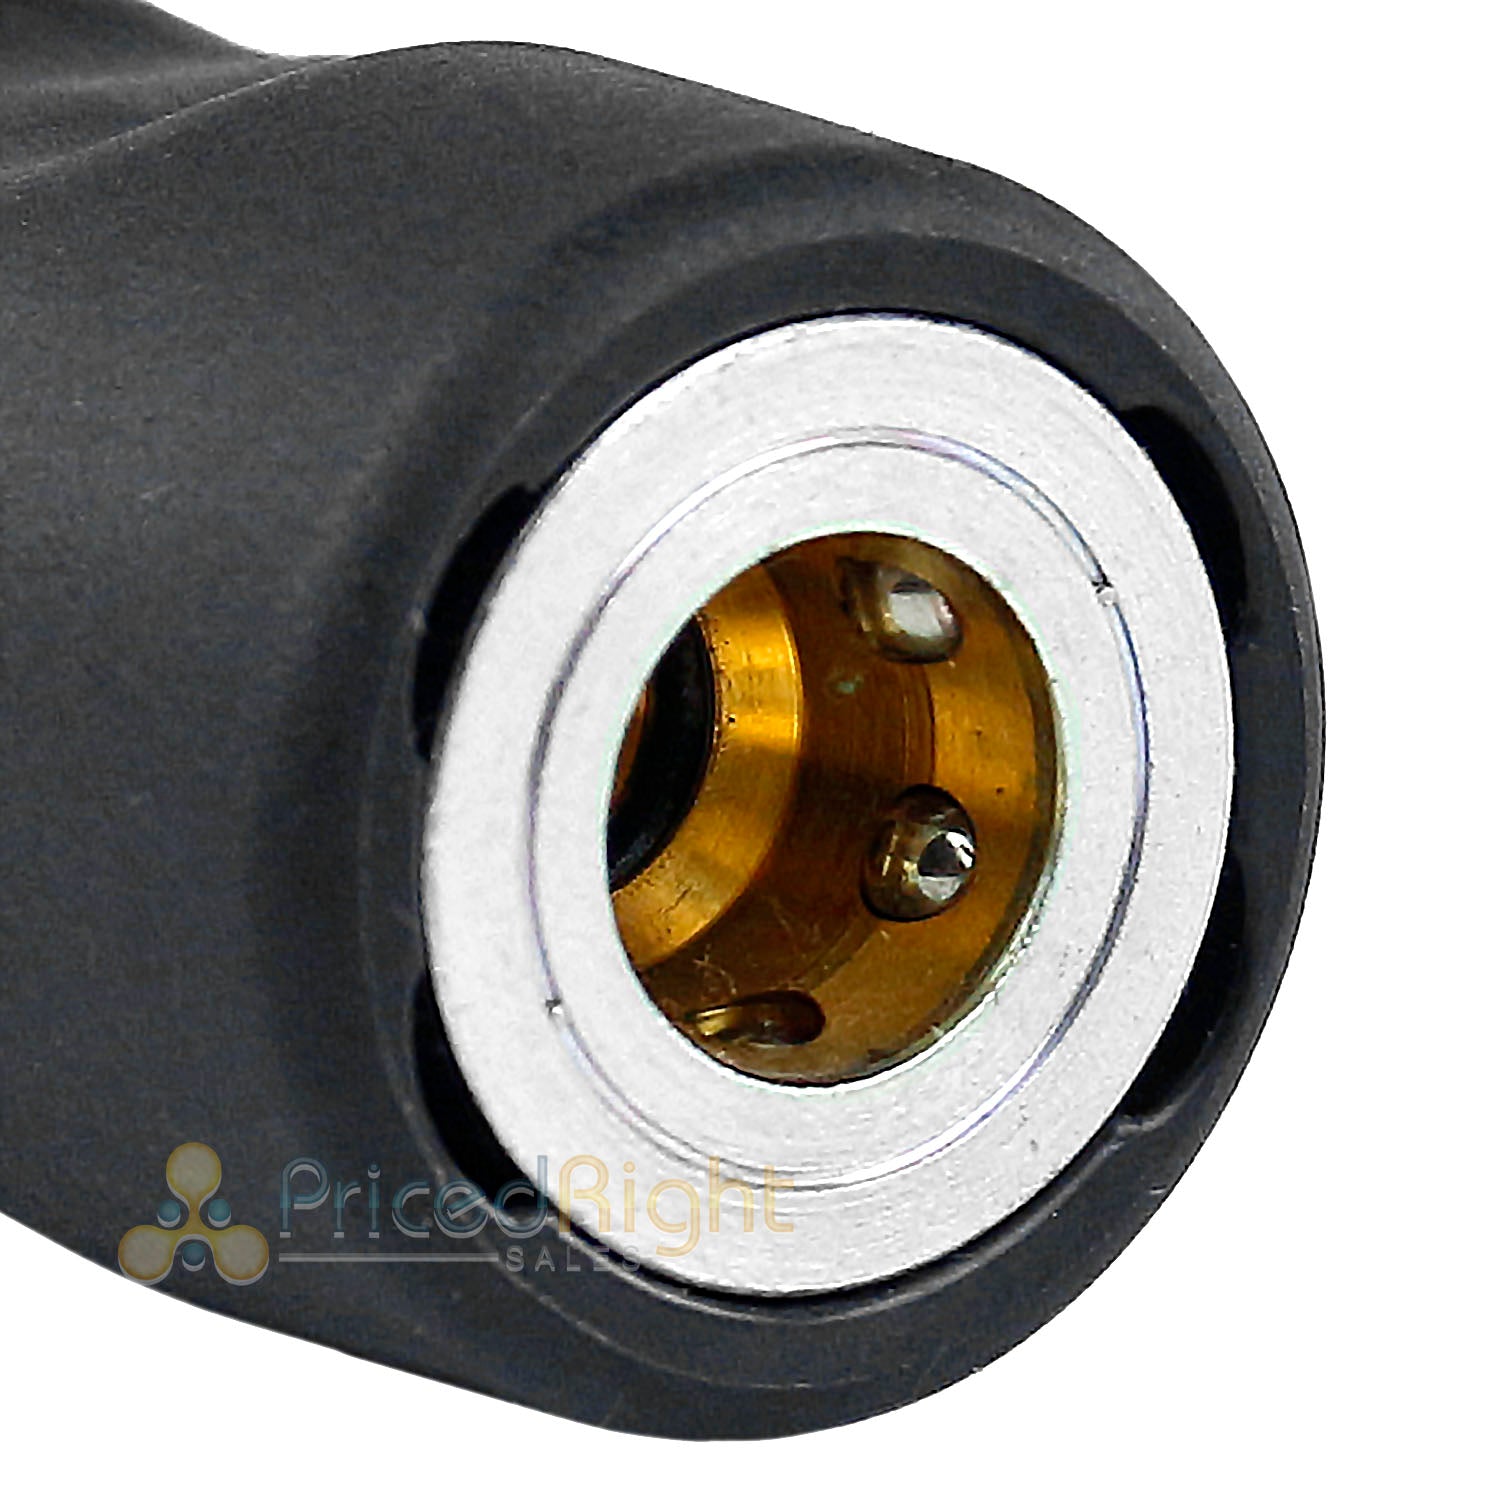 Prevost Safety Air Plug Coupler ISI061252 1/4" 3/8" MNPT High Quality Prevo S1